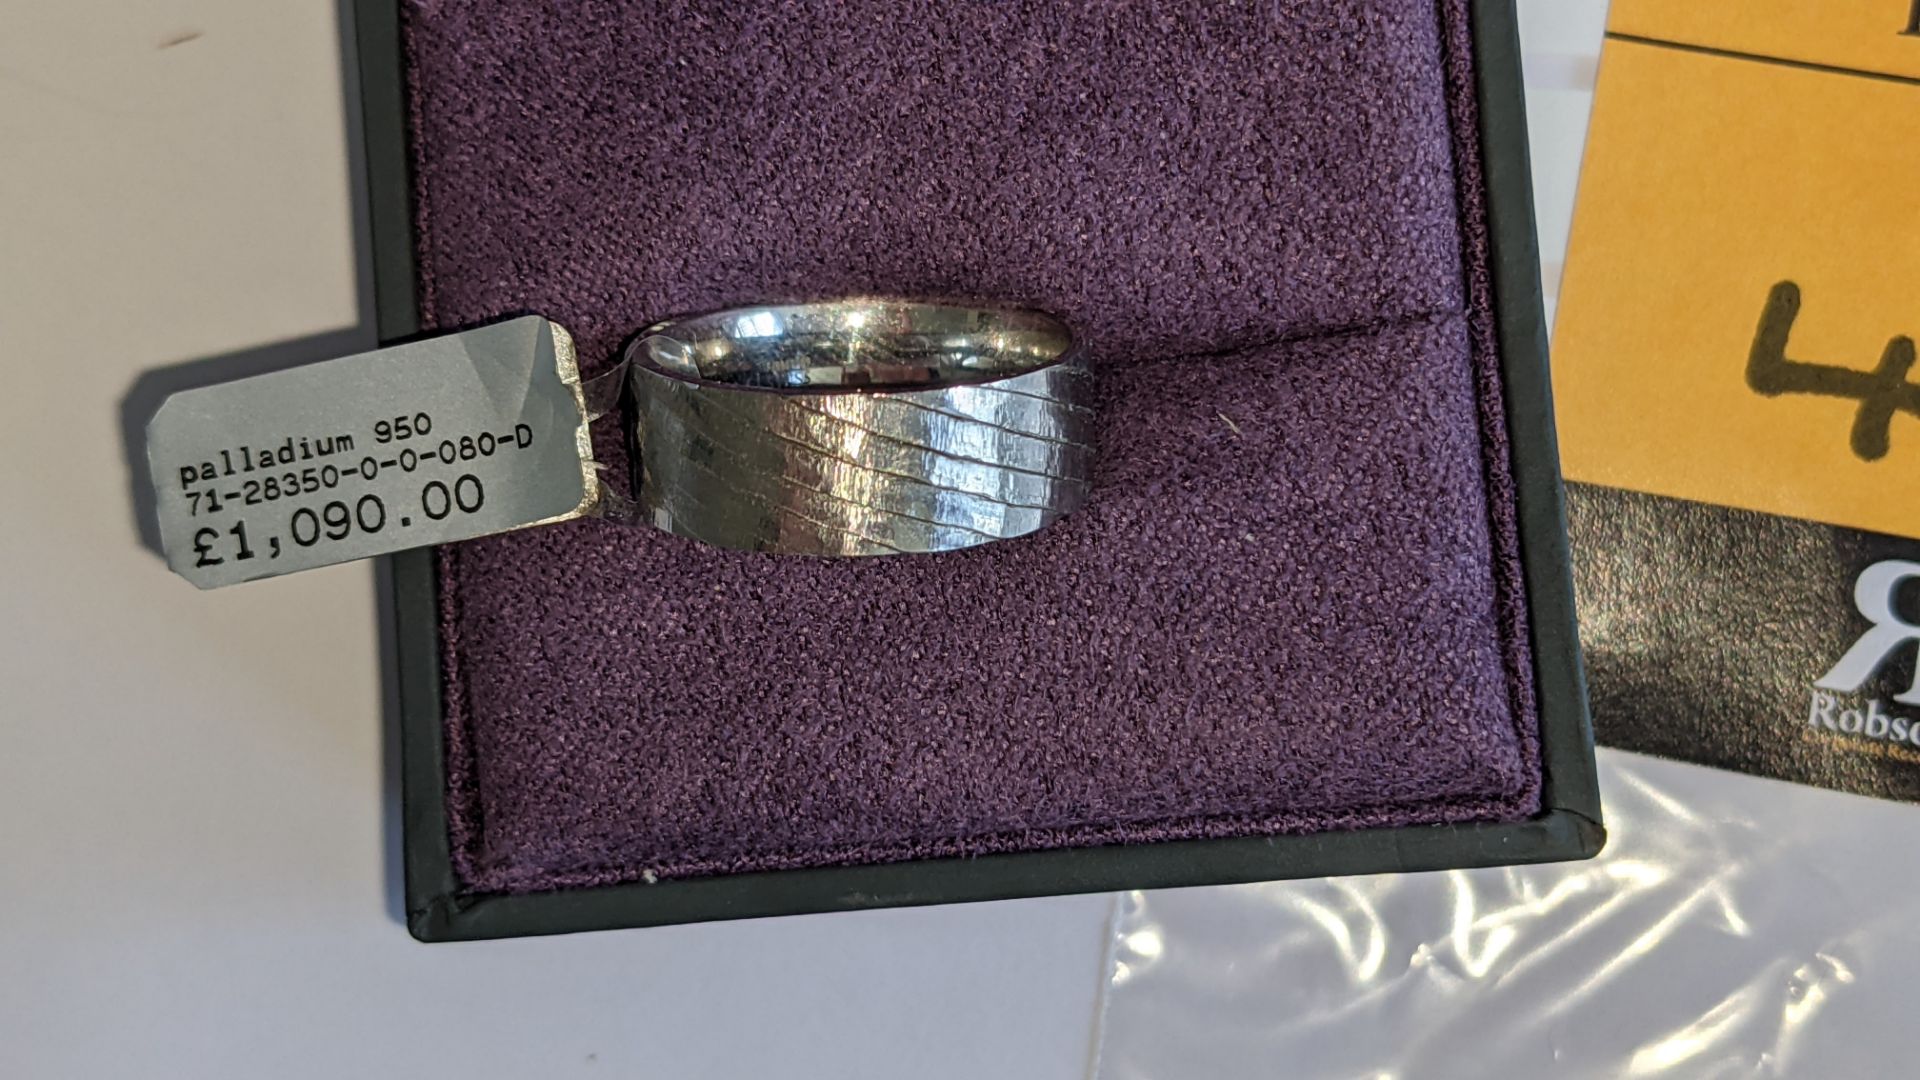 Platinum 950 8mm striped wedding band. RRP £1,090 - Image 5 of 12